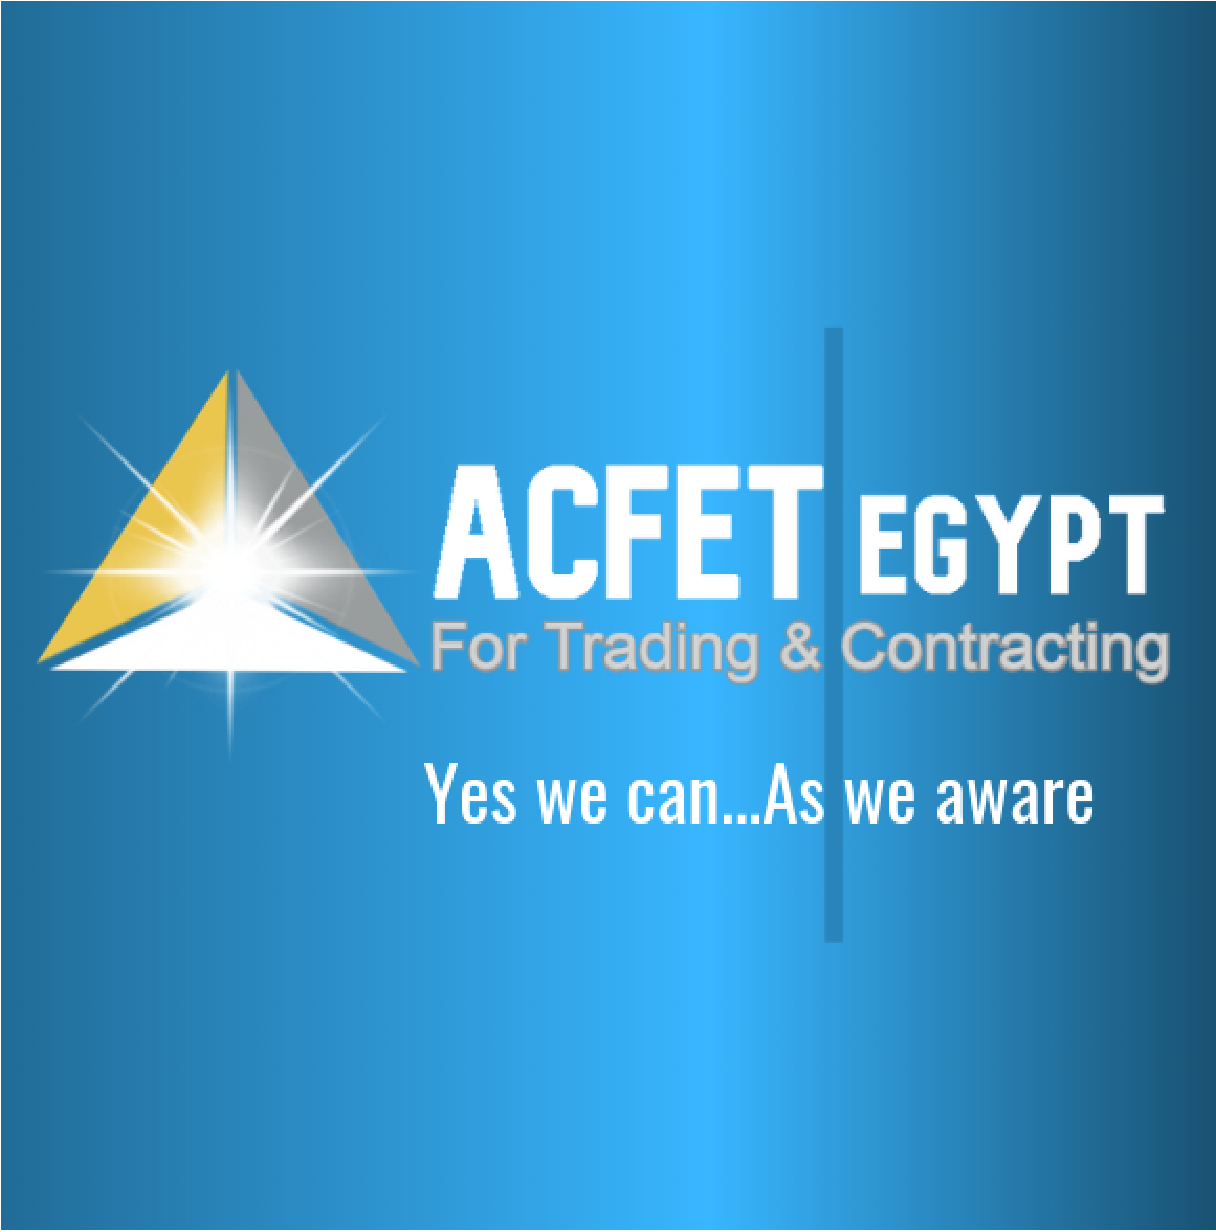 ACFET a leading company